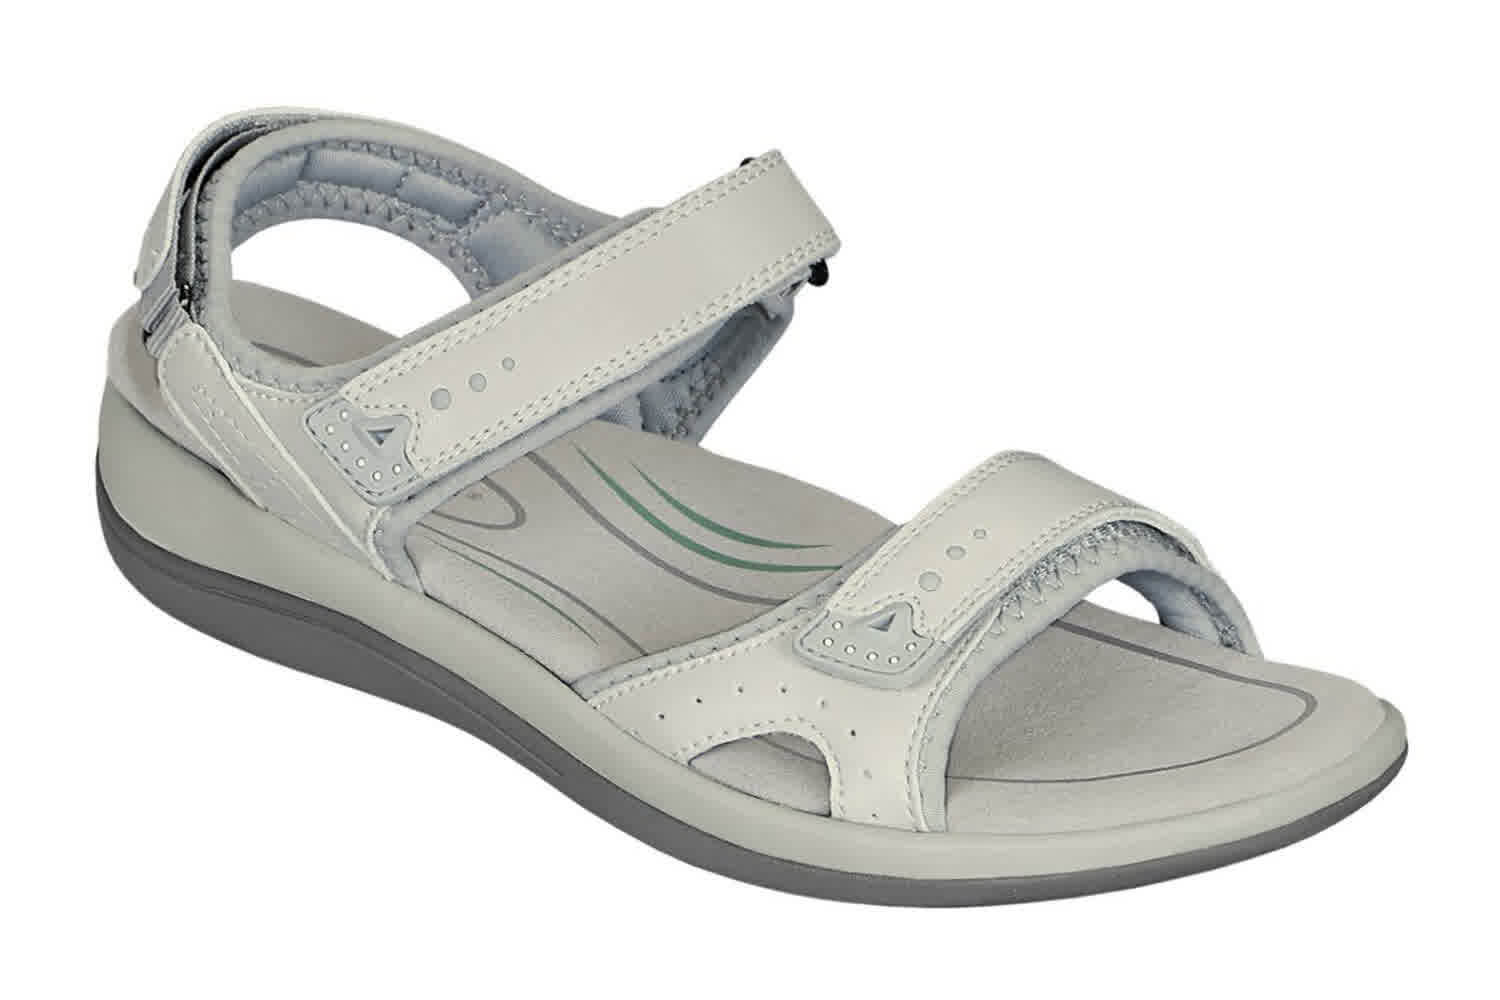 Orthofeet Shoes Malibu 963 Women's Sandal - Comfort Orthopedic Diabetic  Shoe - Extra Wide - Extra Depth